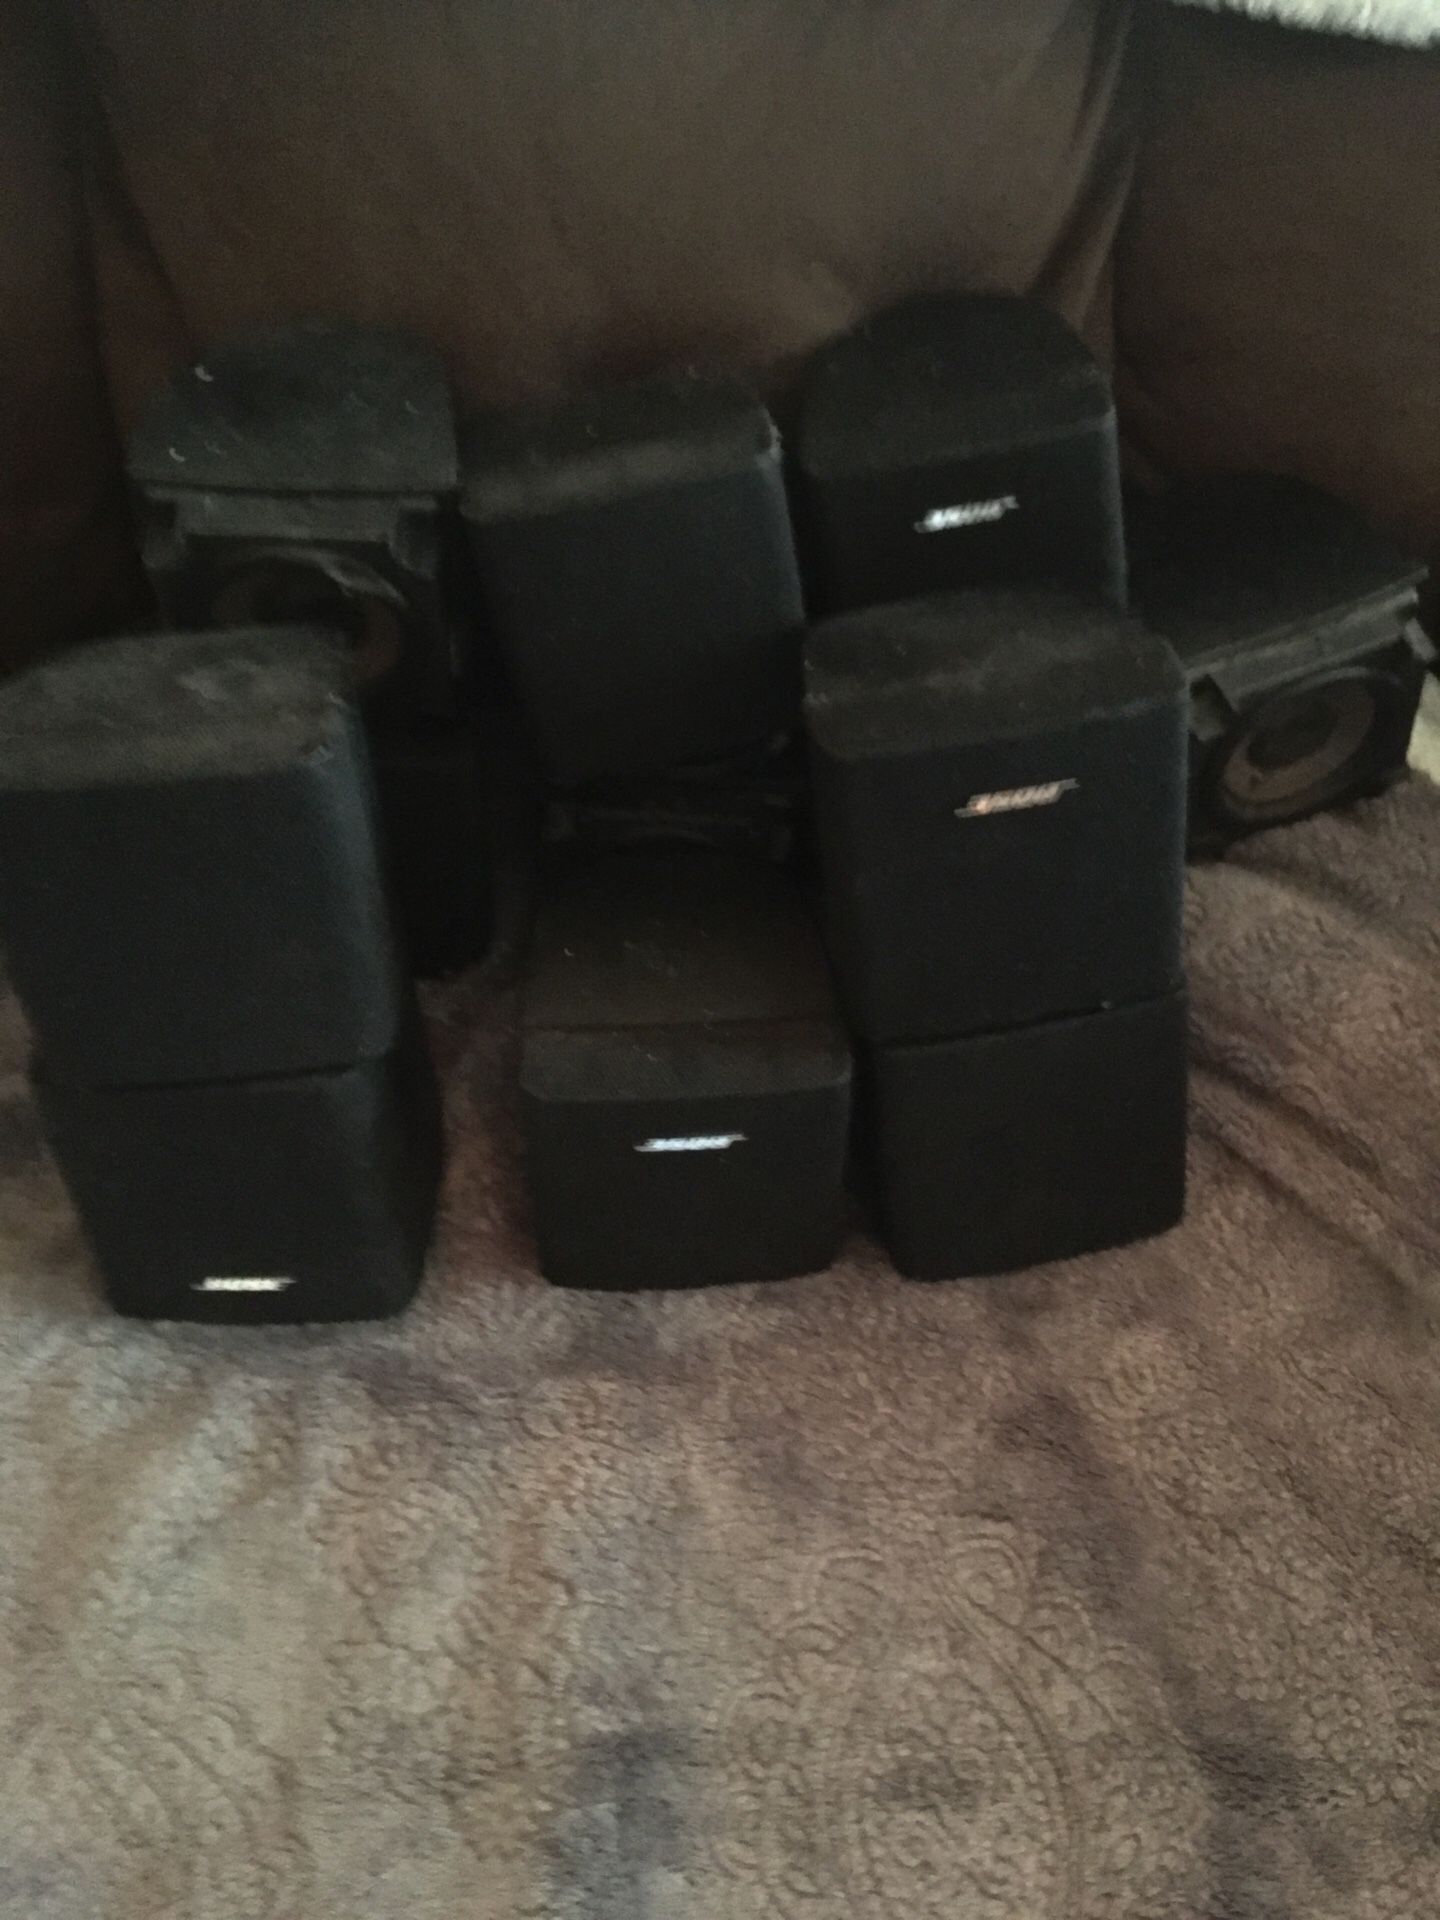 12. Bose cubes speakers